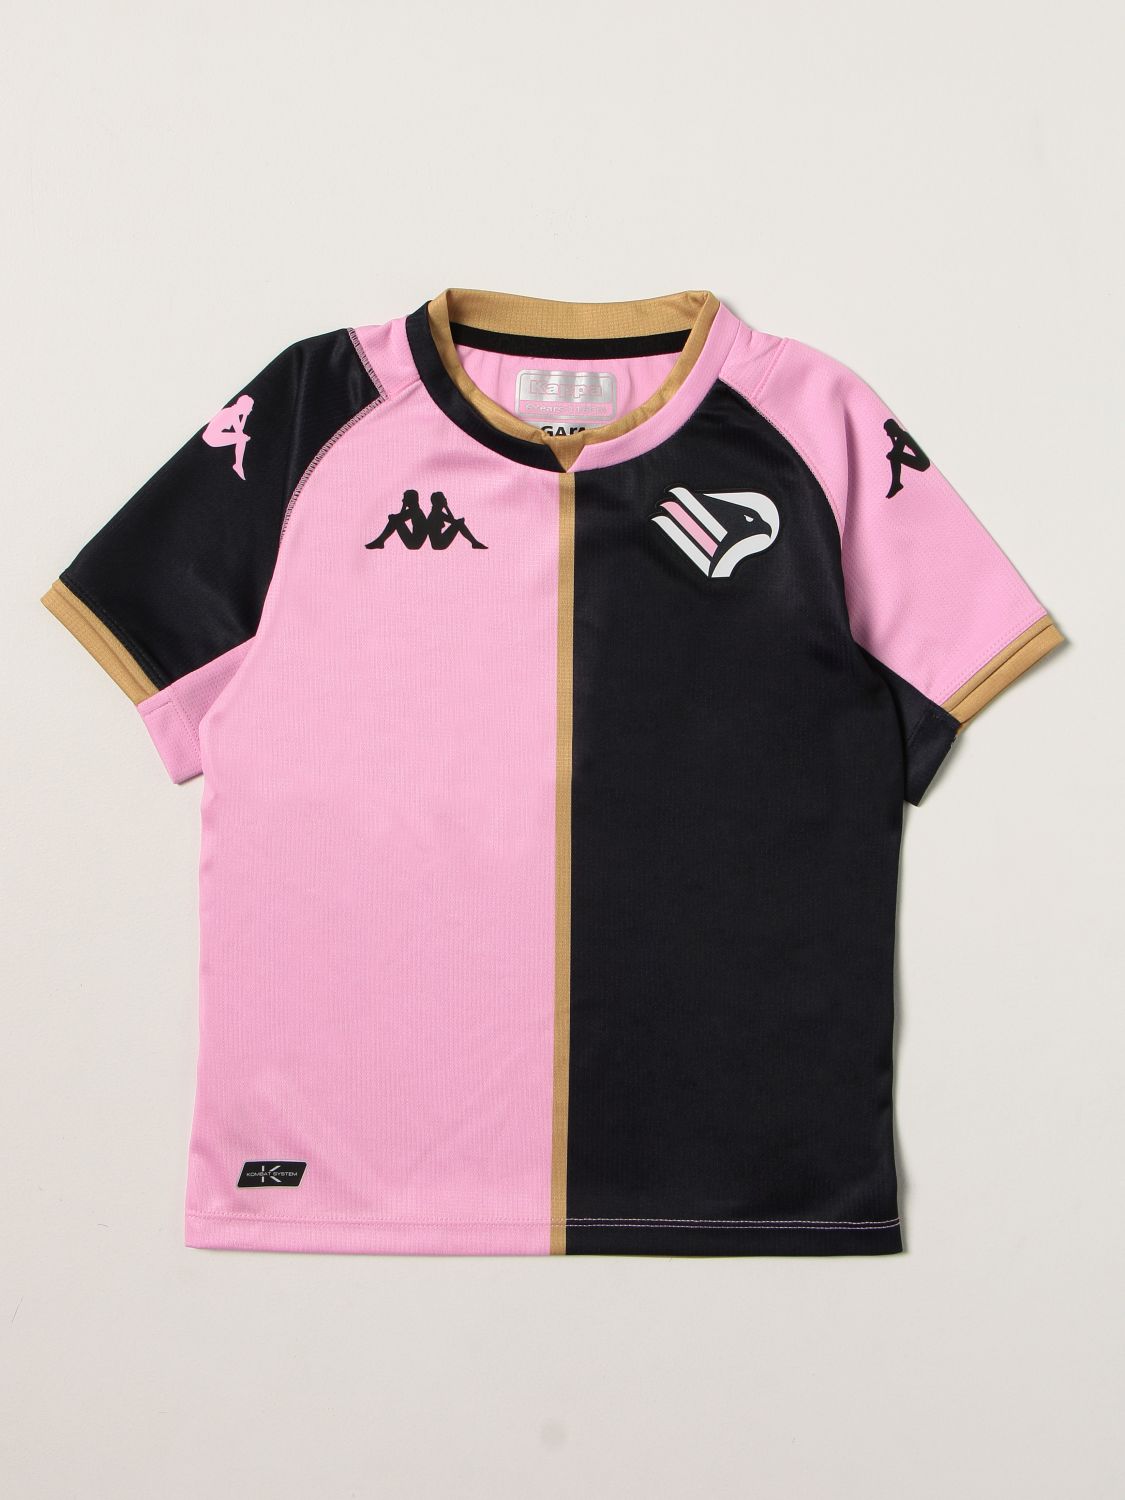 T-shirt Palermo: Maglia kombat 1st gara palermo 2021/22 - bambino rosa 1